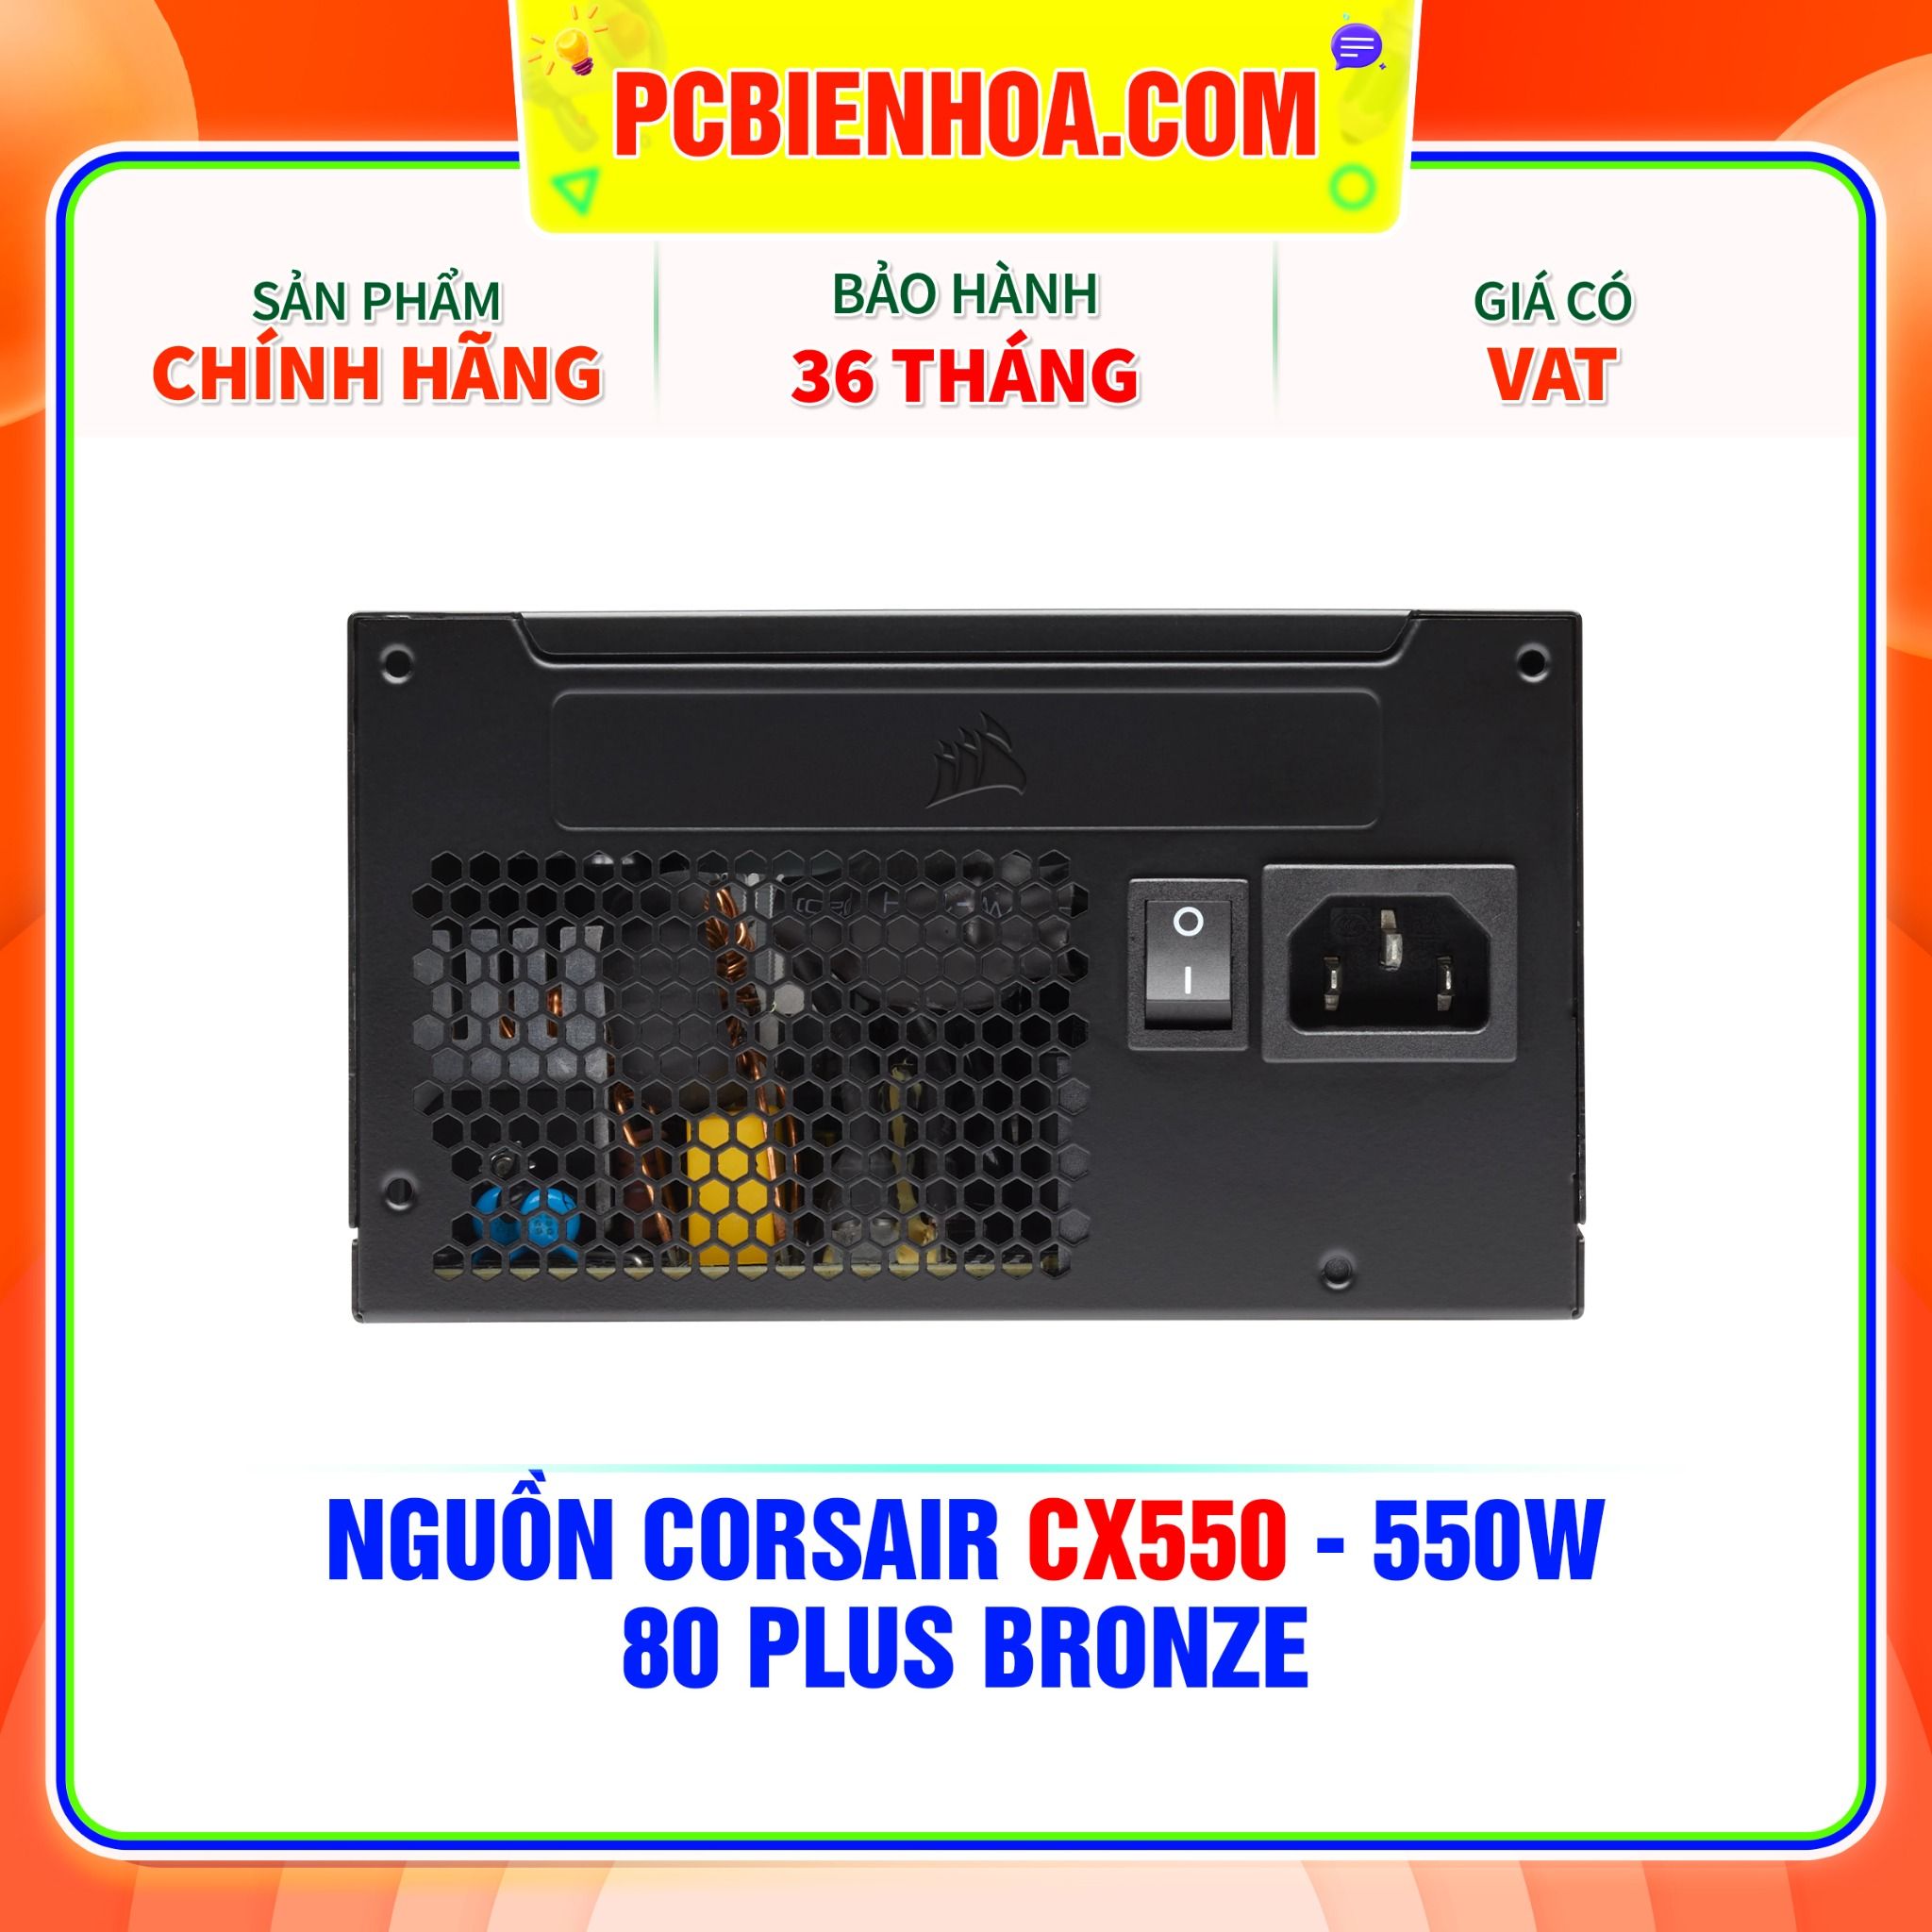  NGUỒN CORSAIR CX550 - 550W ( 80PLUS BRONZE ) 